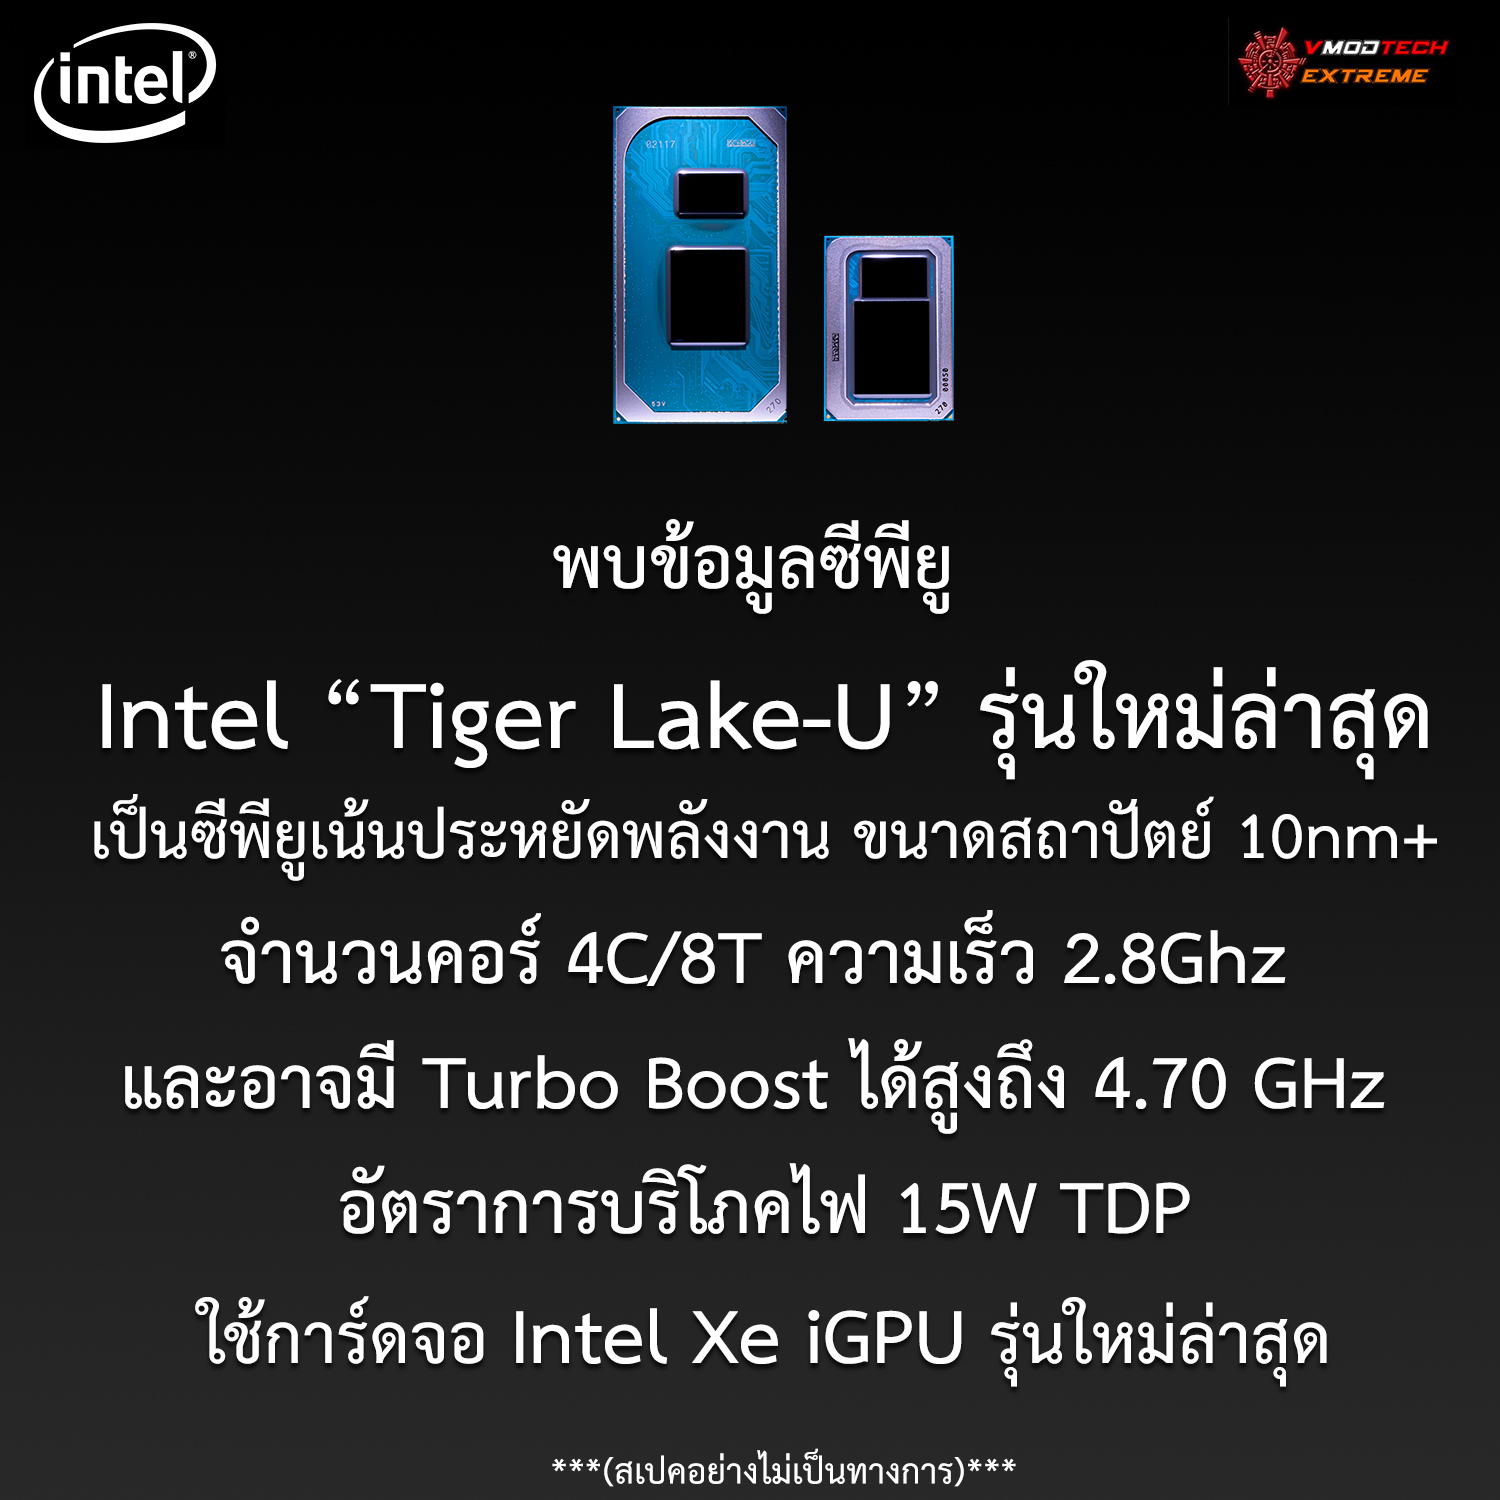 intel tiger lake u intel xe high clock speed พบข้อมูลซีพียู Intel Tiger Lake U รุ่นใหม่ล่าสุดที่เน้นประหยัดพลังงานโดยมีความเร็ว Clock Speed ที่ค่อนข้างสูงเลยทีเดียว 